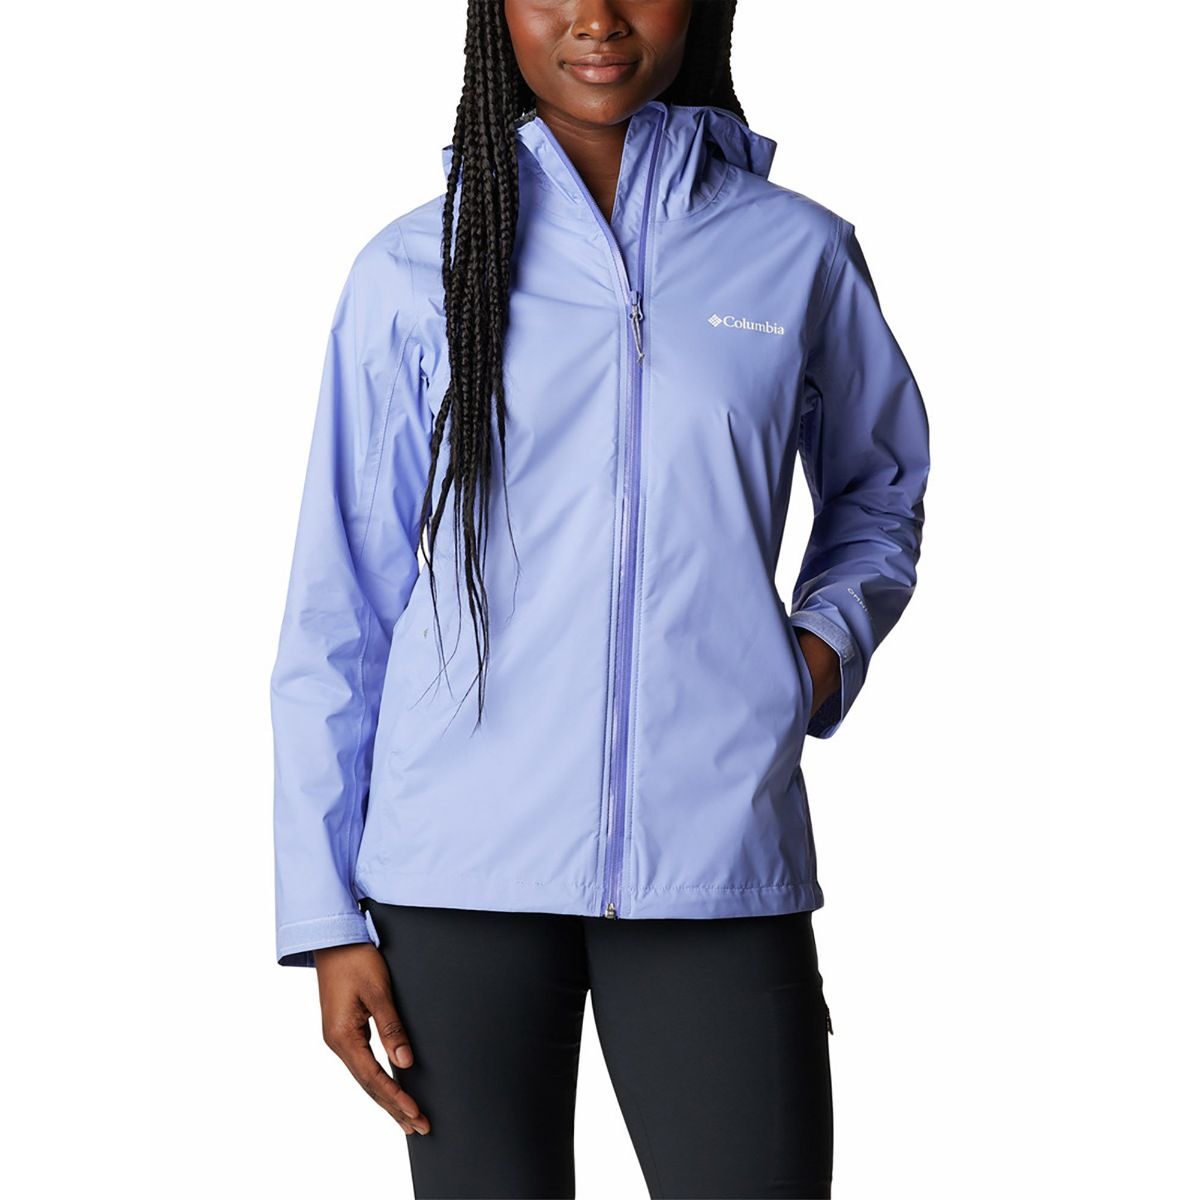 Columbia Women Purple Evapouration Rain Jacket (M): Buy Columbia Women ...